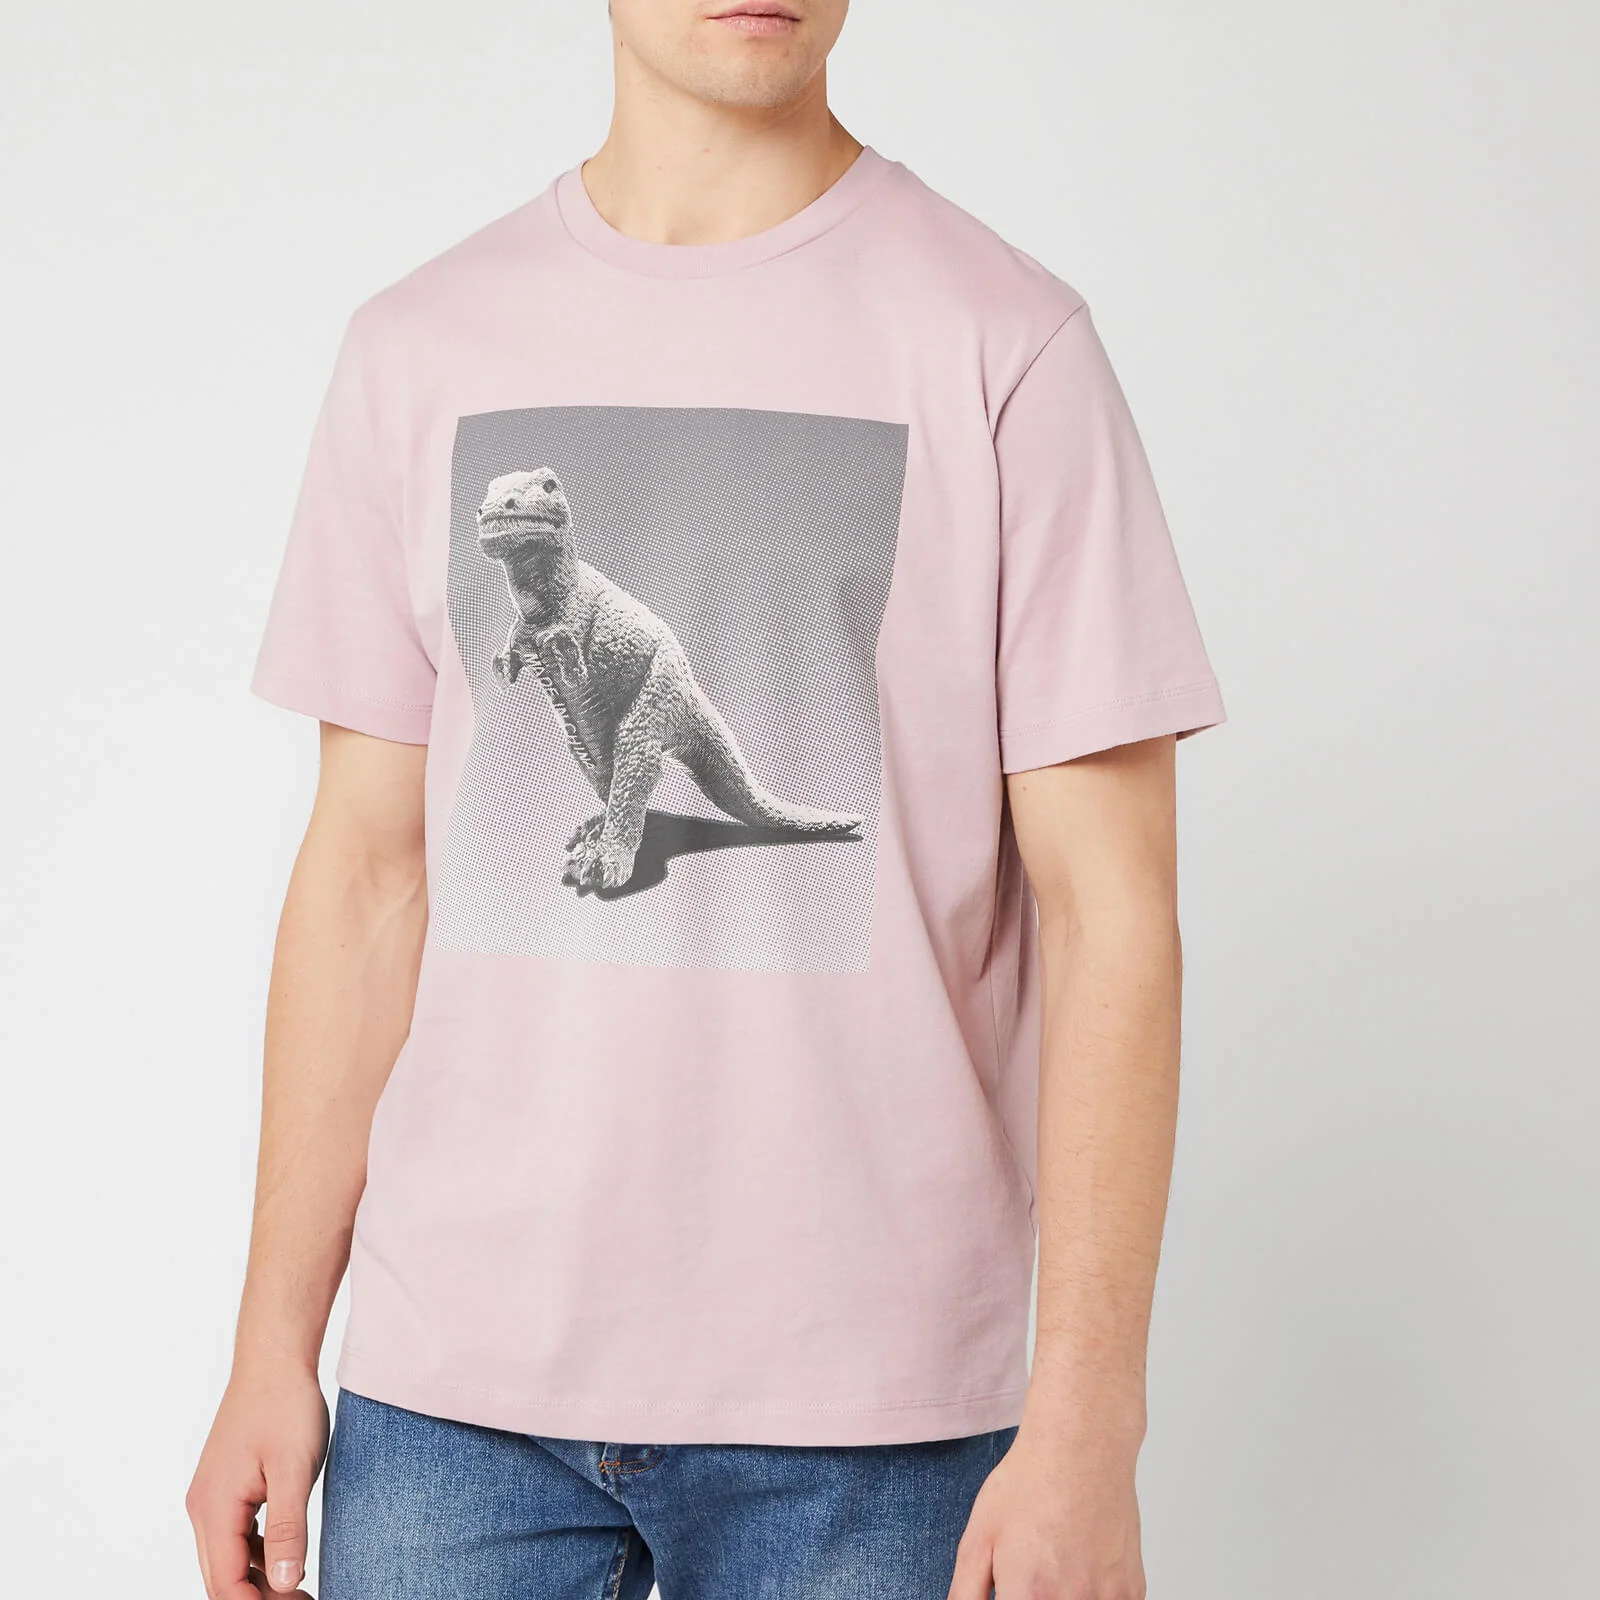 Coach Men's Rexy by Sui Jianguo T-Shirt - Pink Champagne Image 1